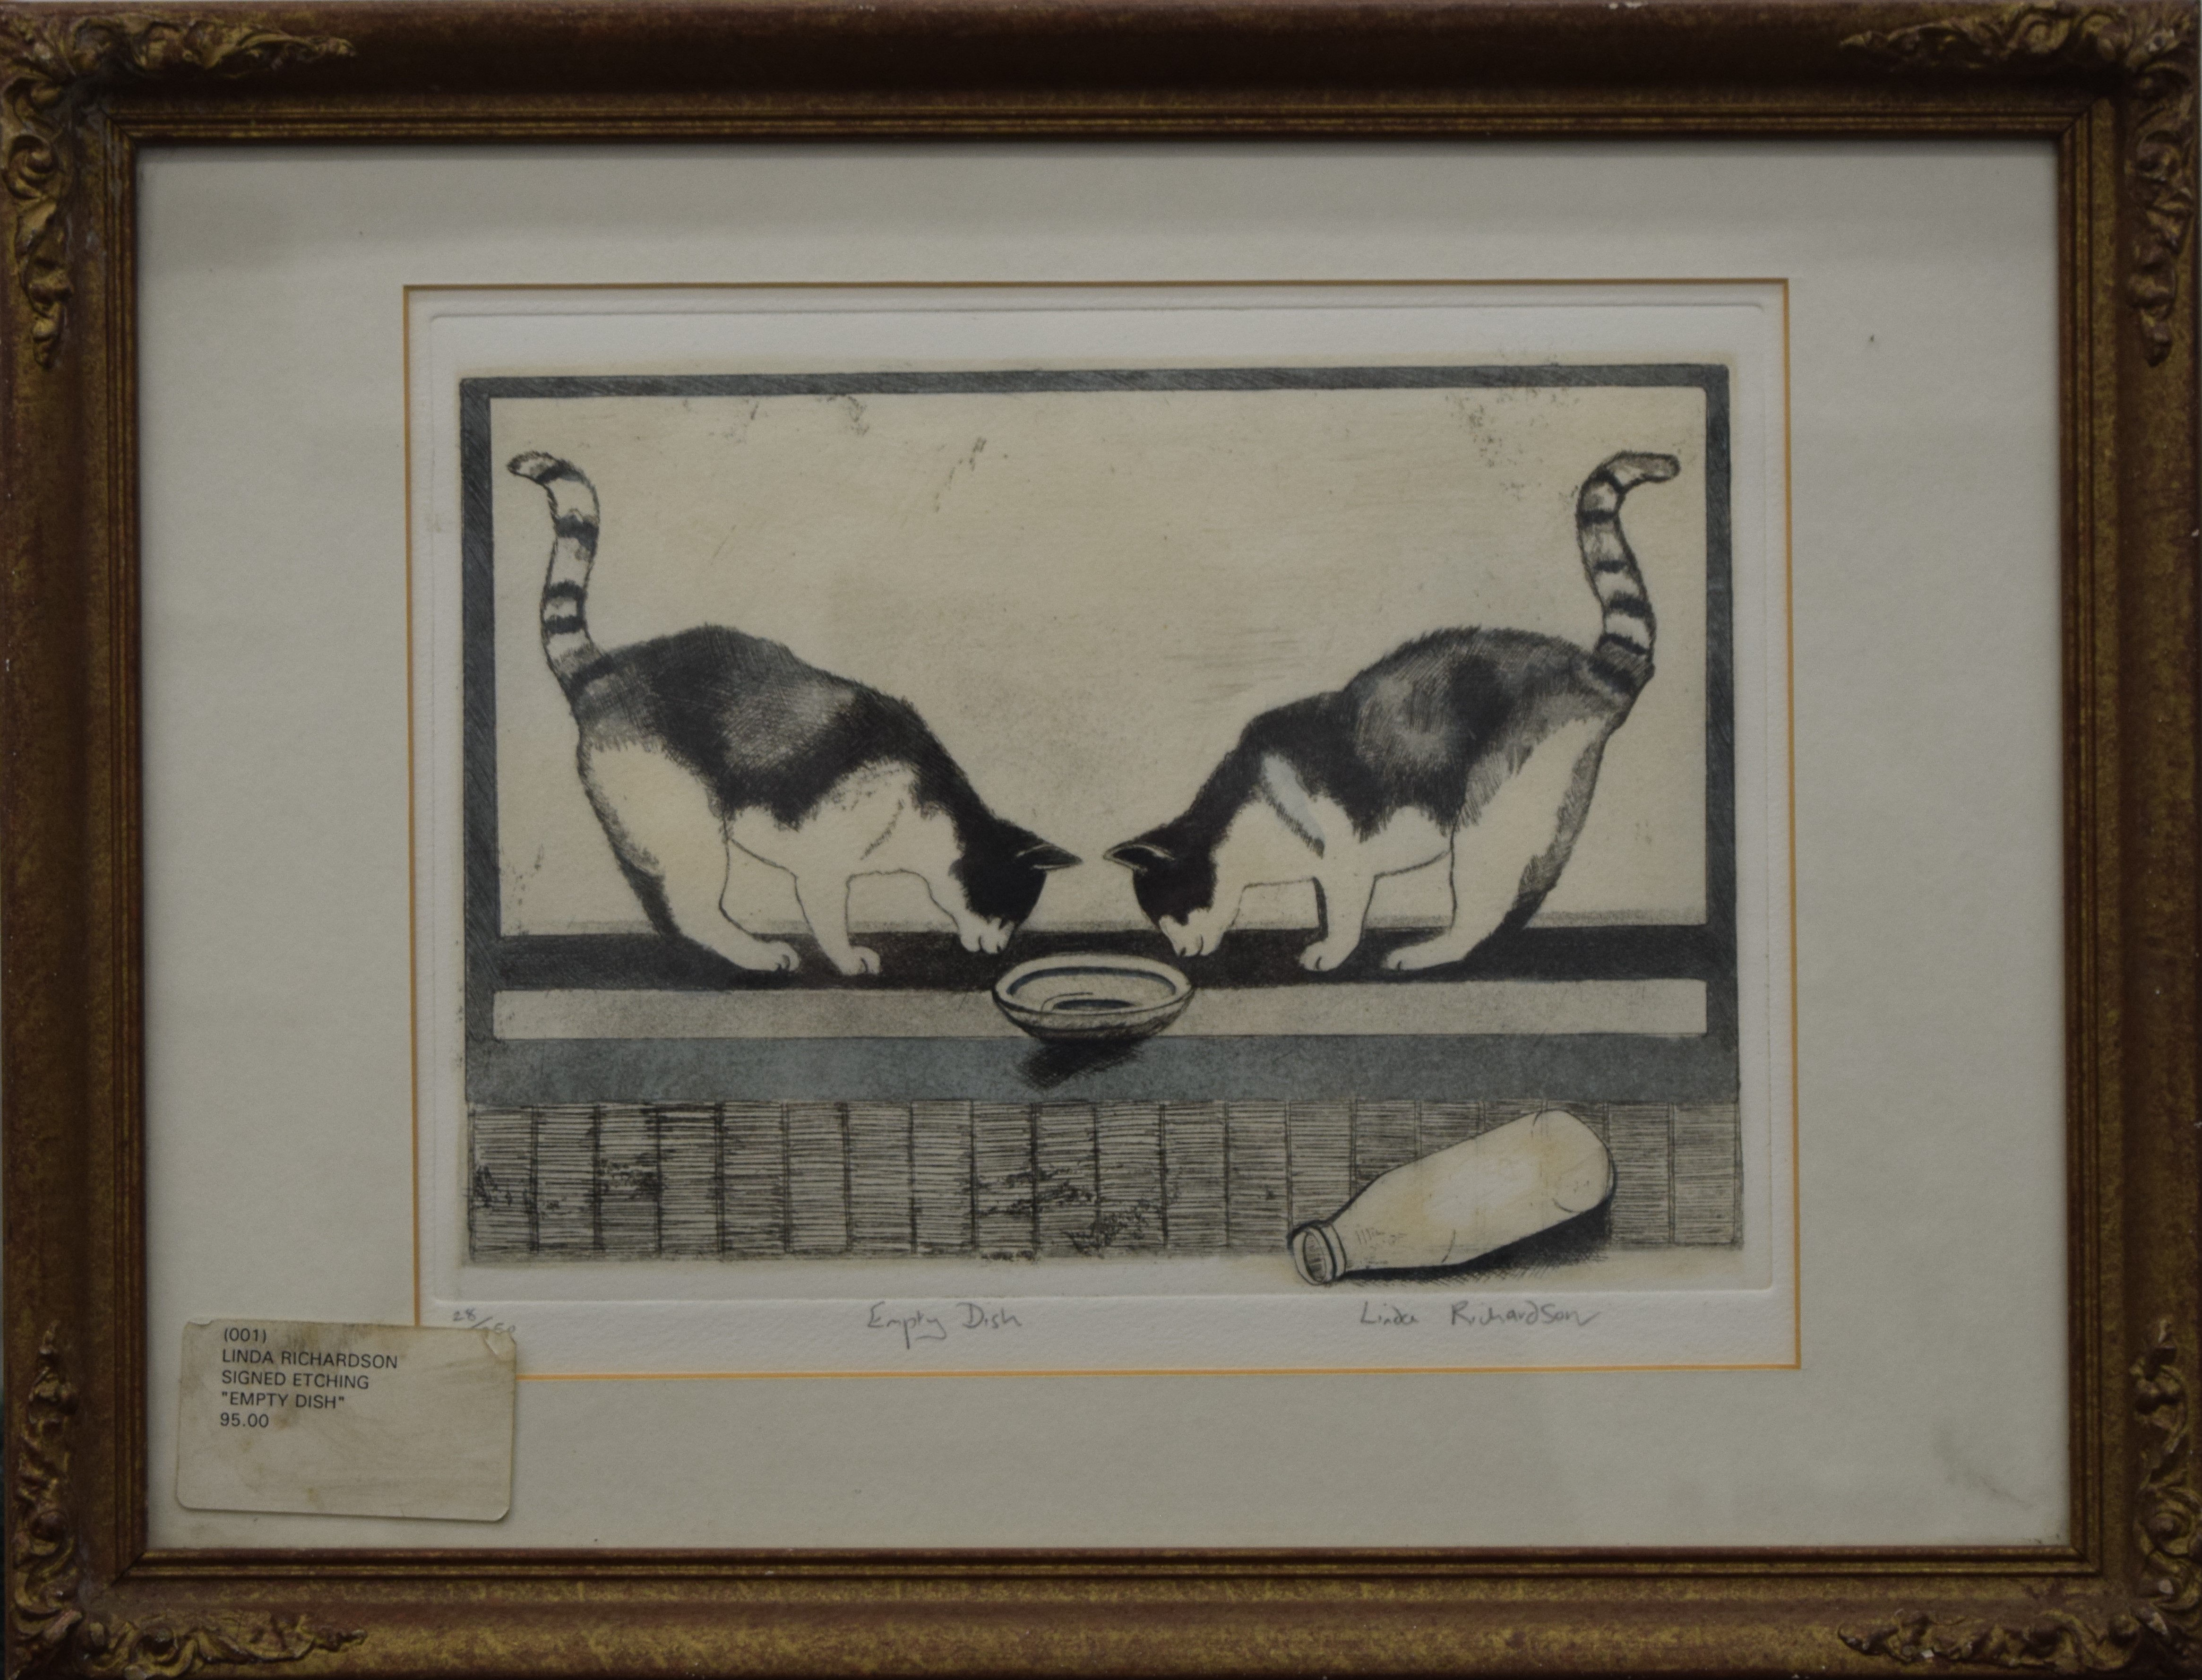 LINDA RICHARDSON, 'Empty Dish', etching, signed, titled and numbered 28/250 to margin, - Image 2 of 3